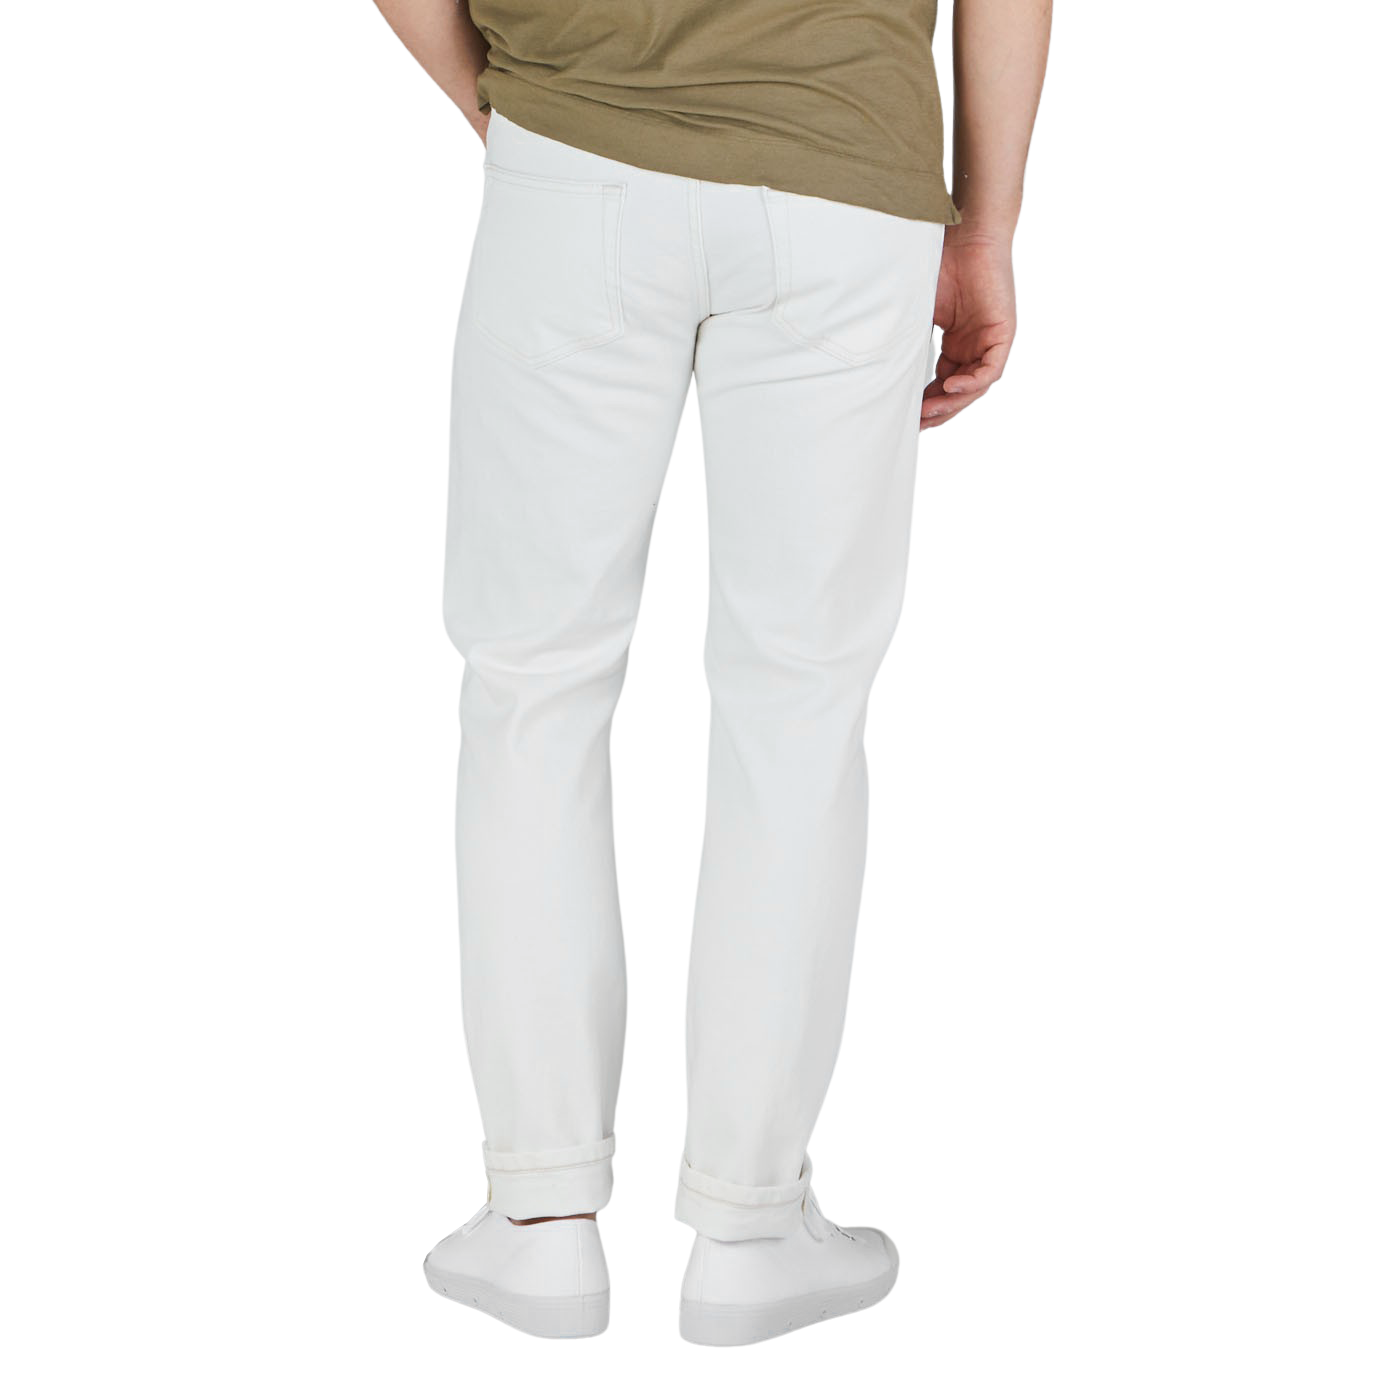 Jenerica Natural White Cotton TM005 Jeans Back1